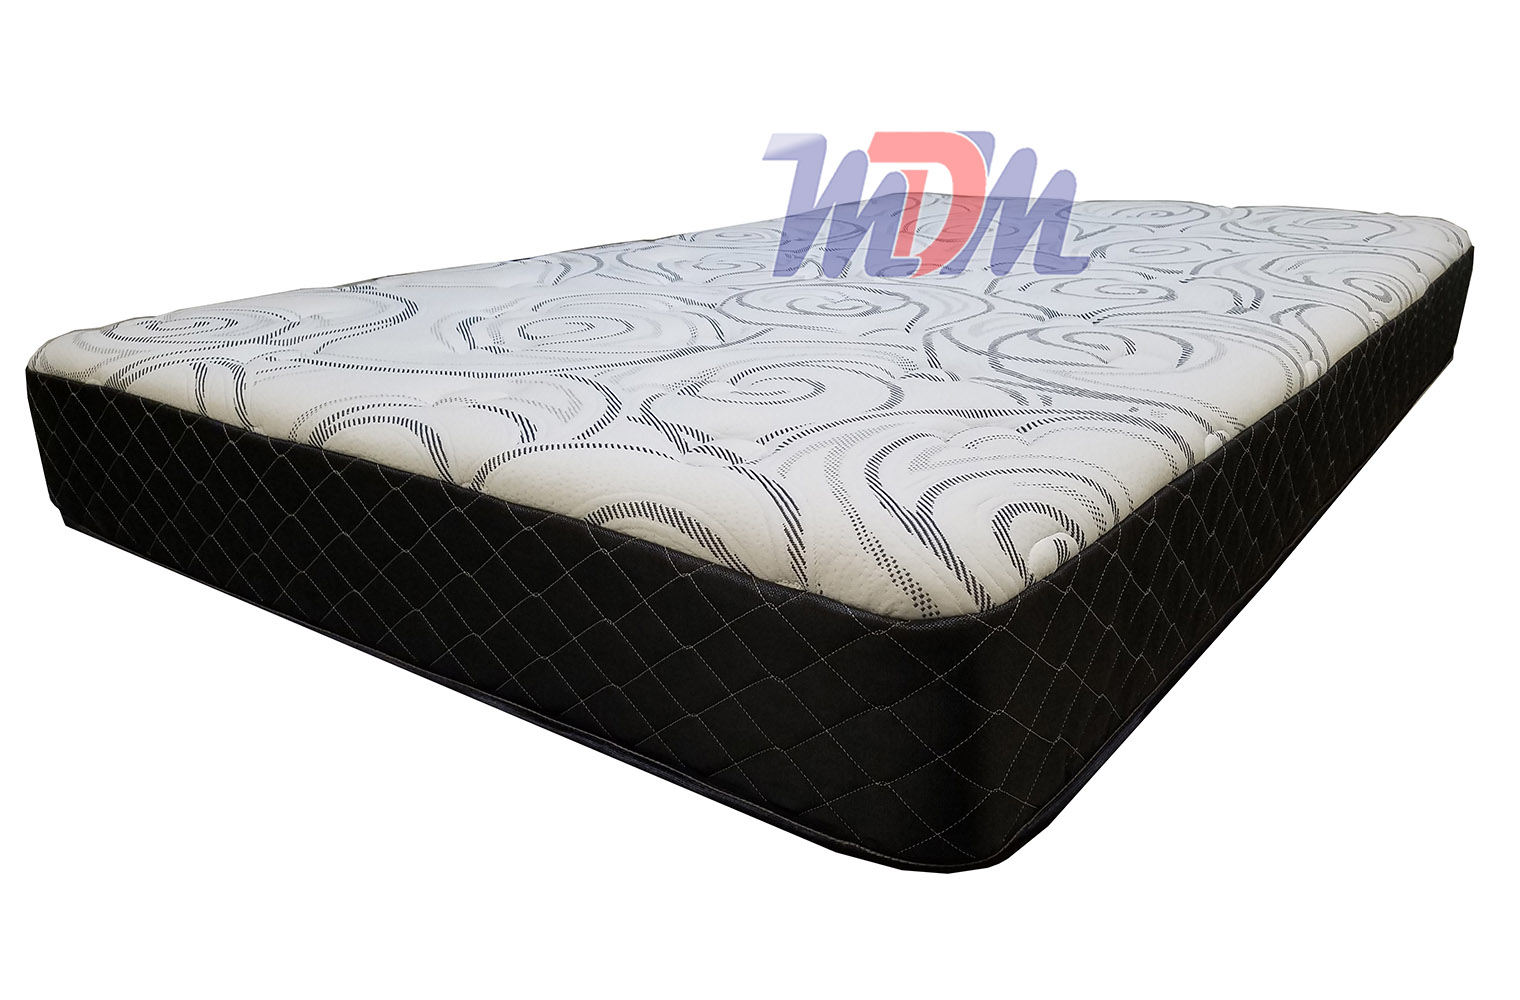 48 x 72 memory foam mattress